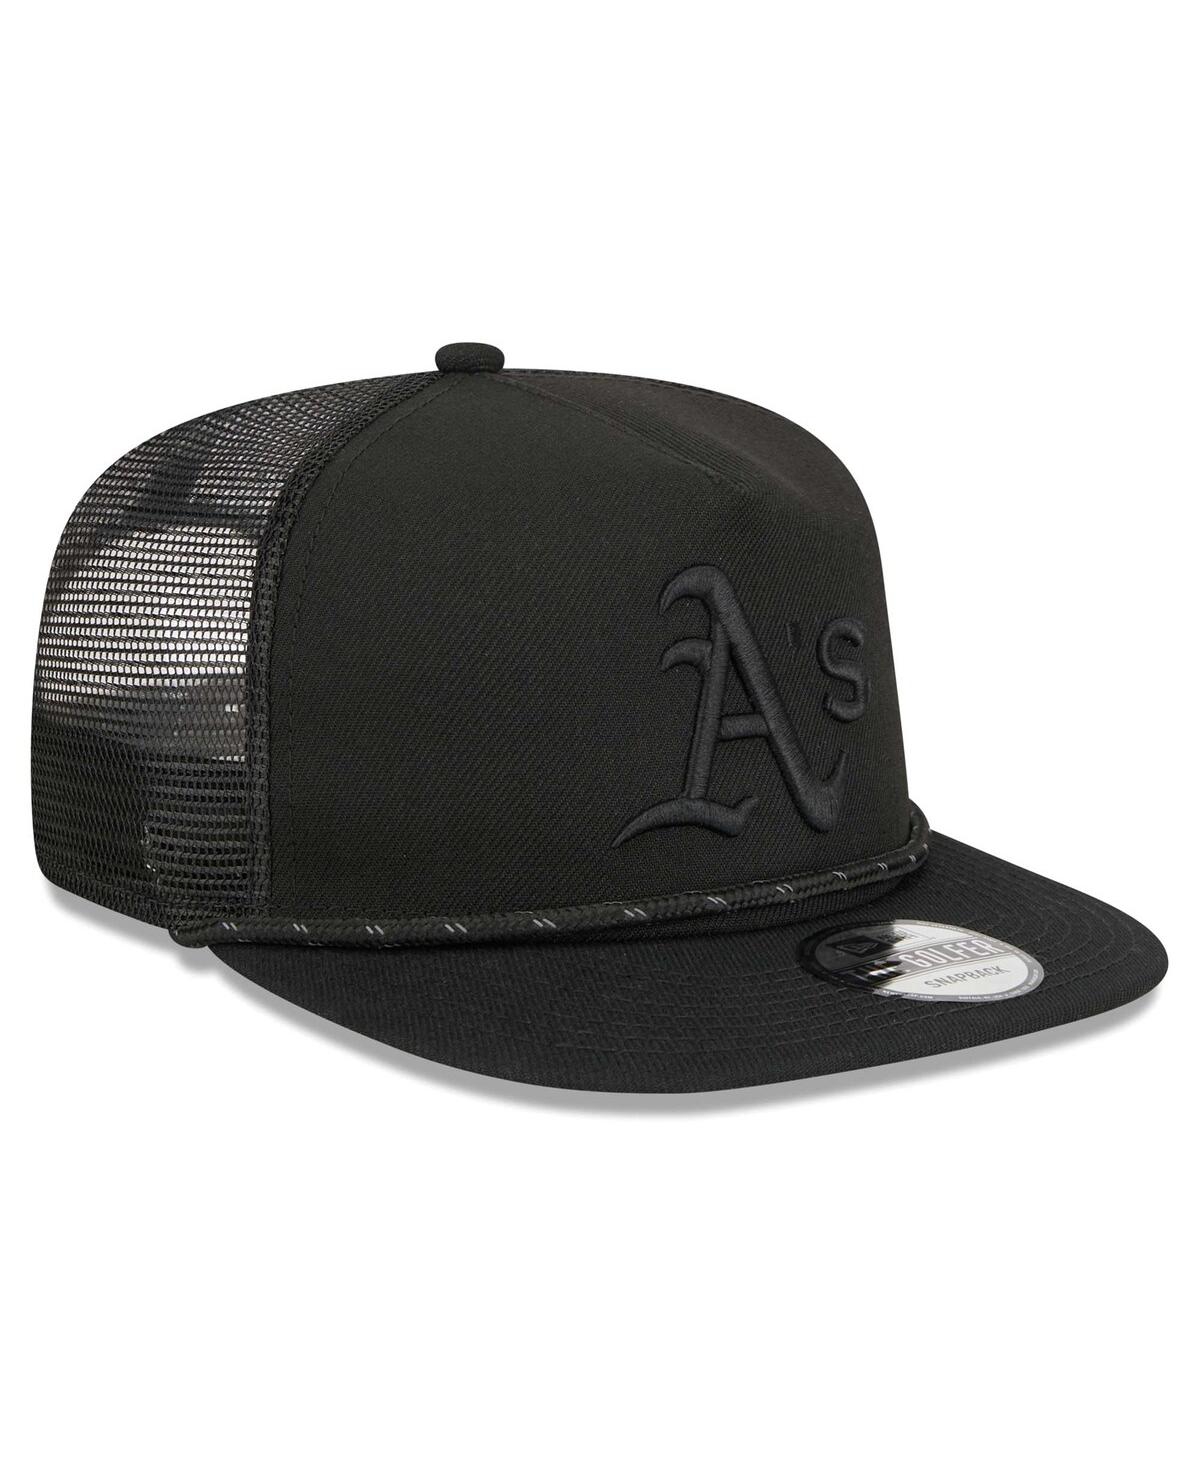 Shop New Era Men's  Oakland Athletics Black On Black Meshback Golfer Snapback Hat